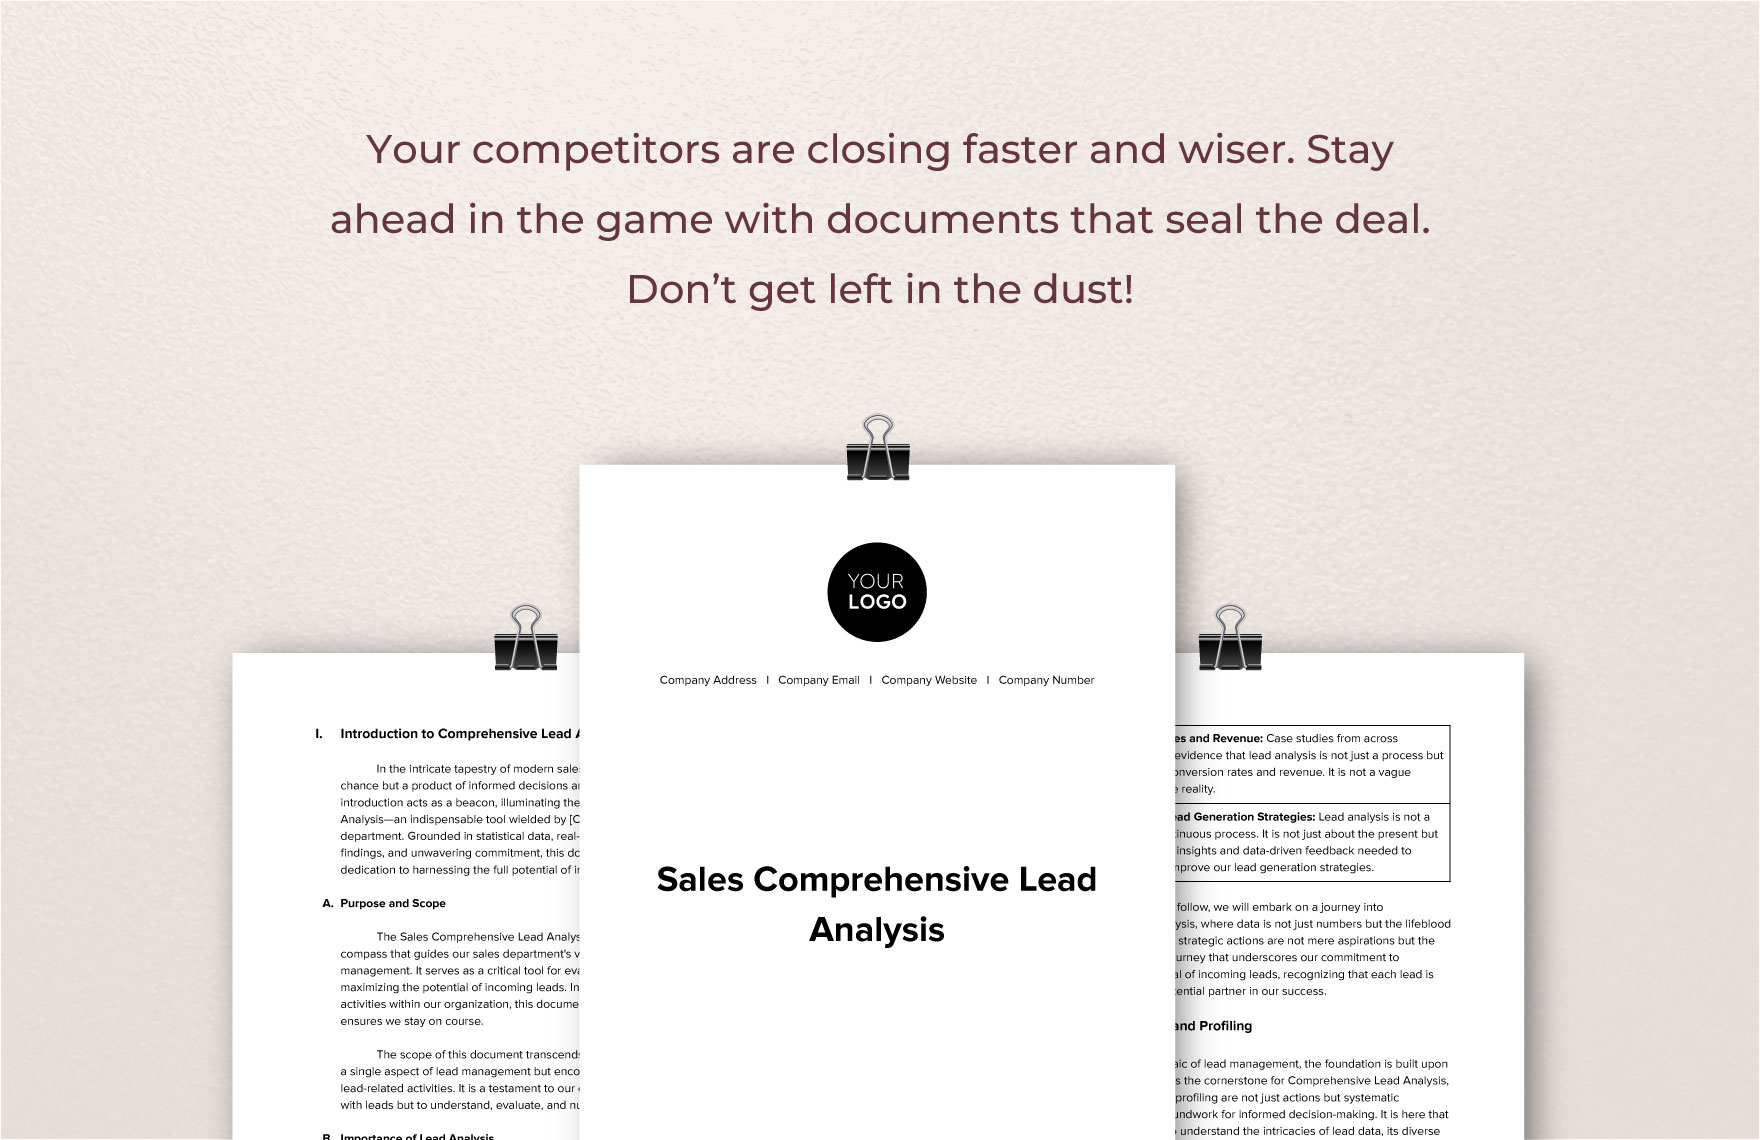 Sales Comprehensive Lead Analysis Template